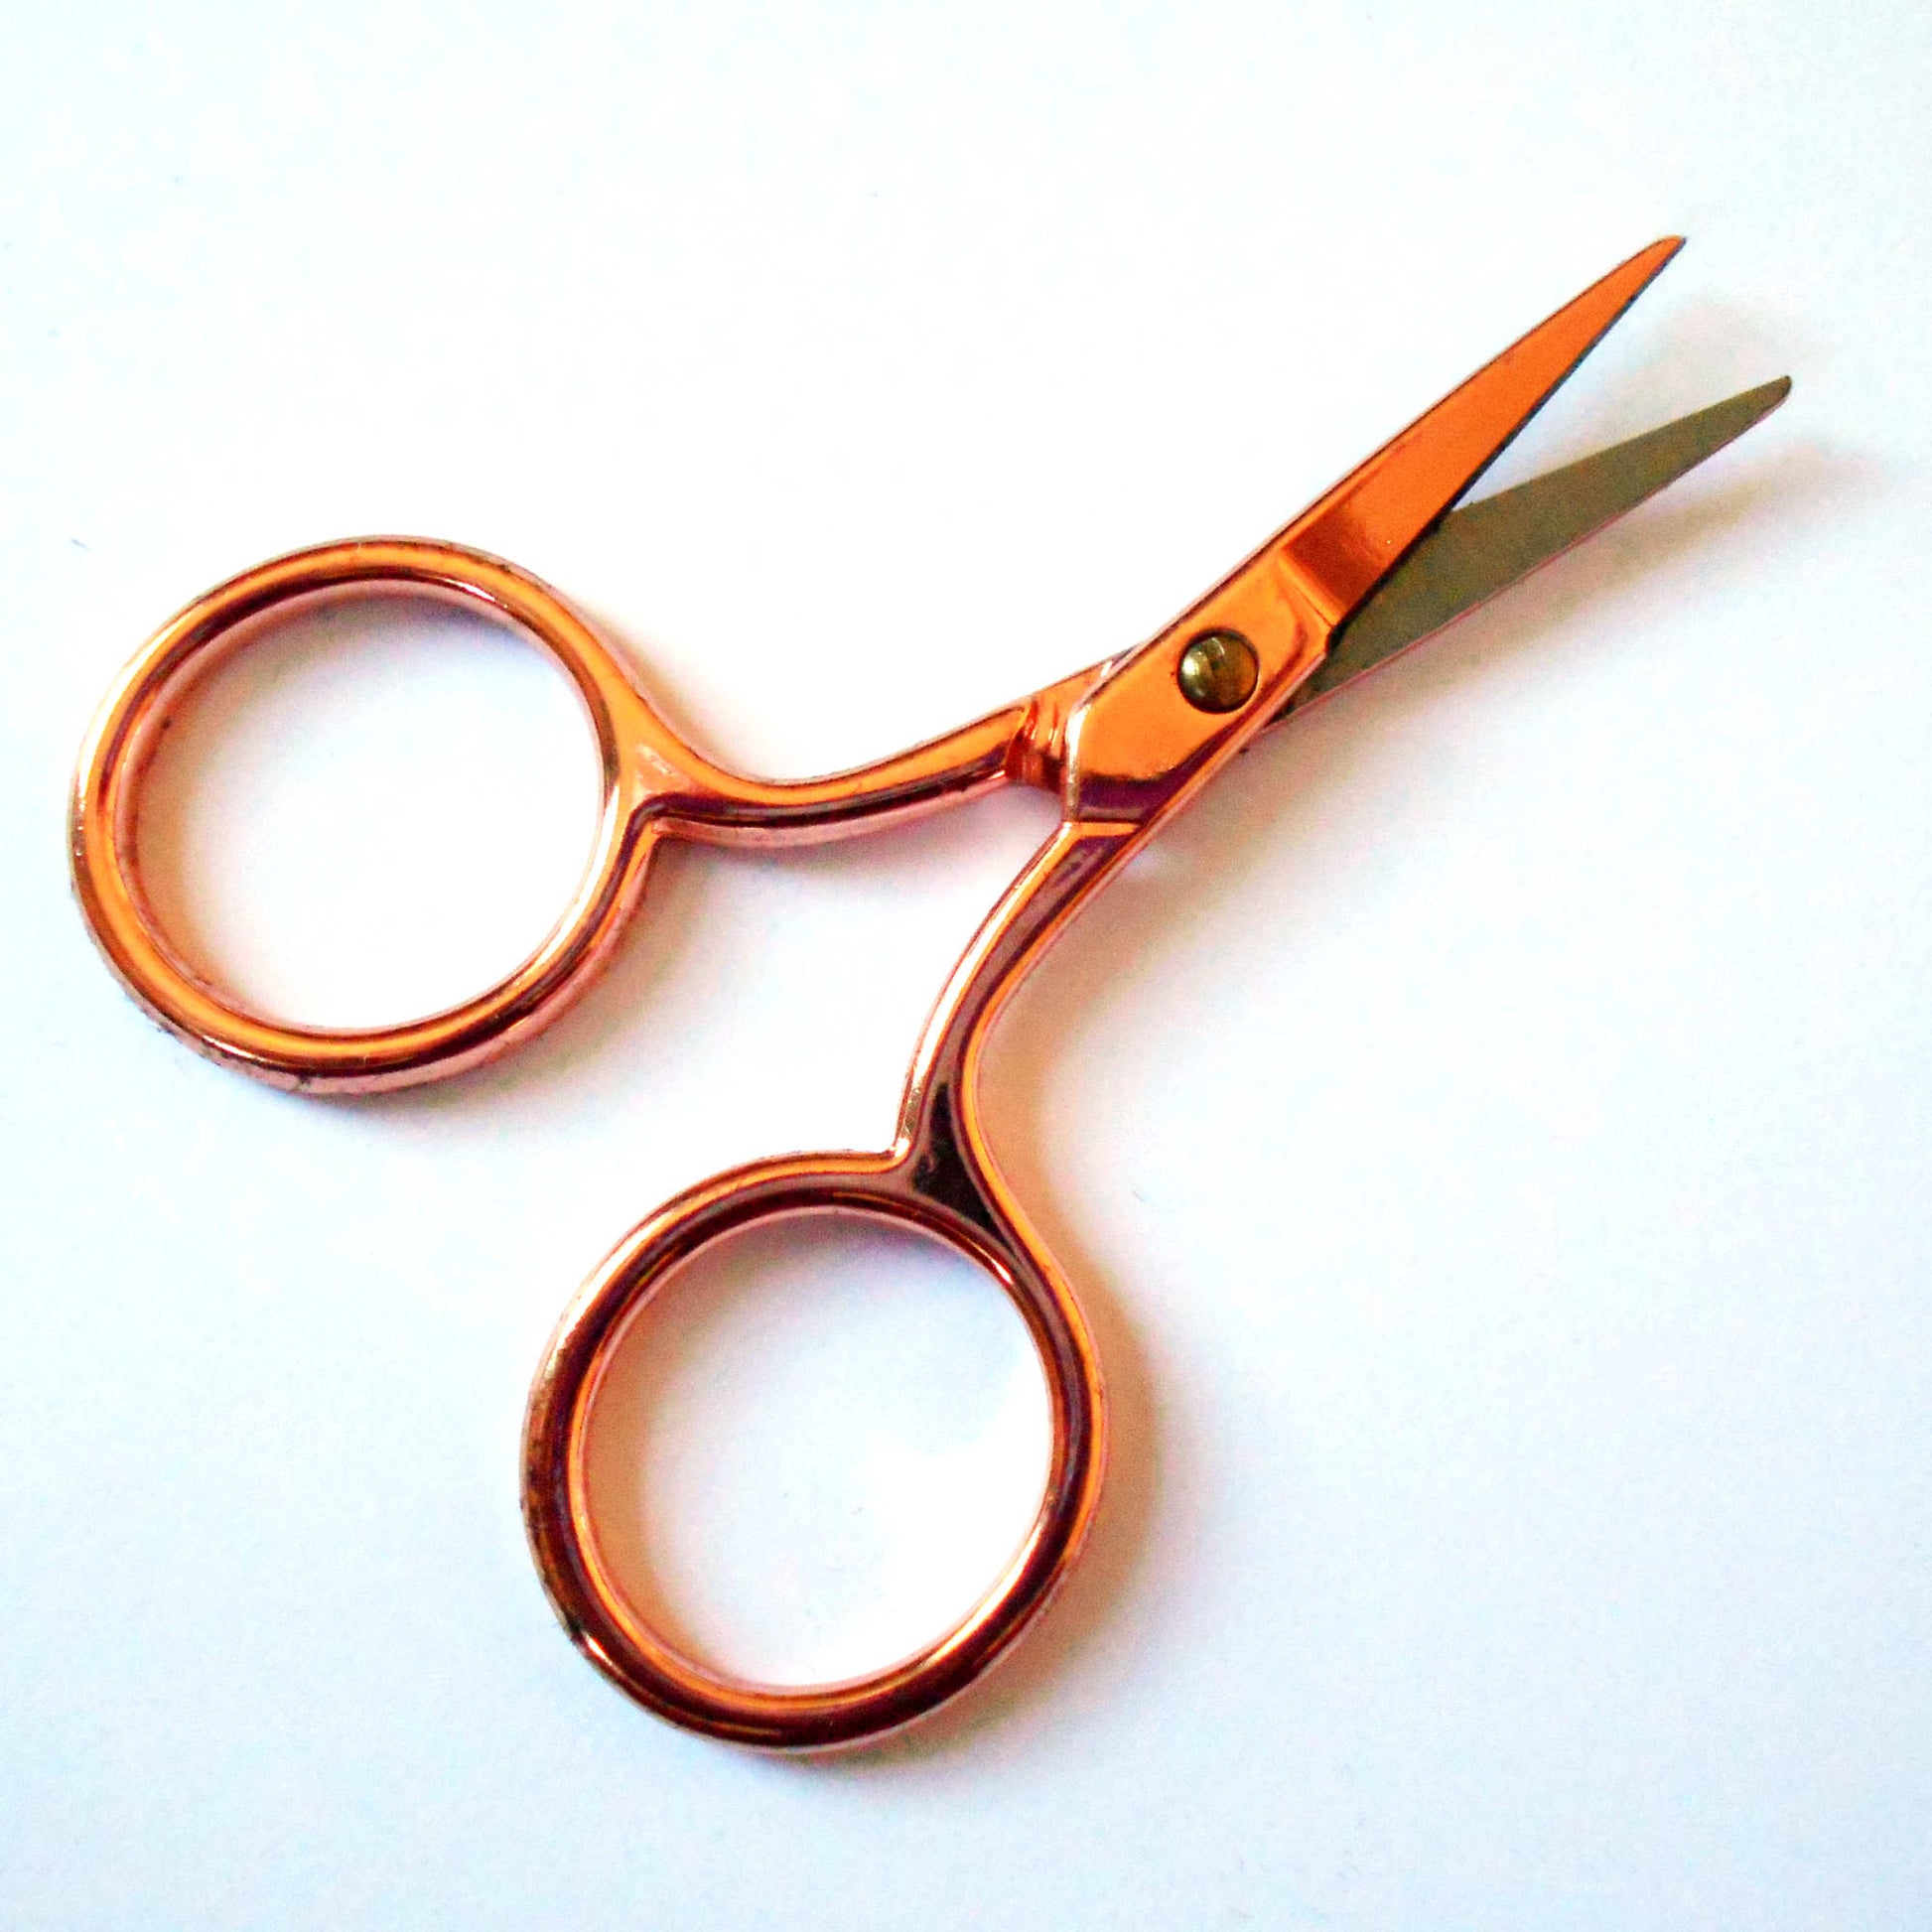 Hemline Small Needlework Scissors